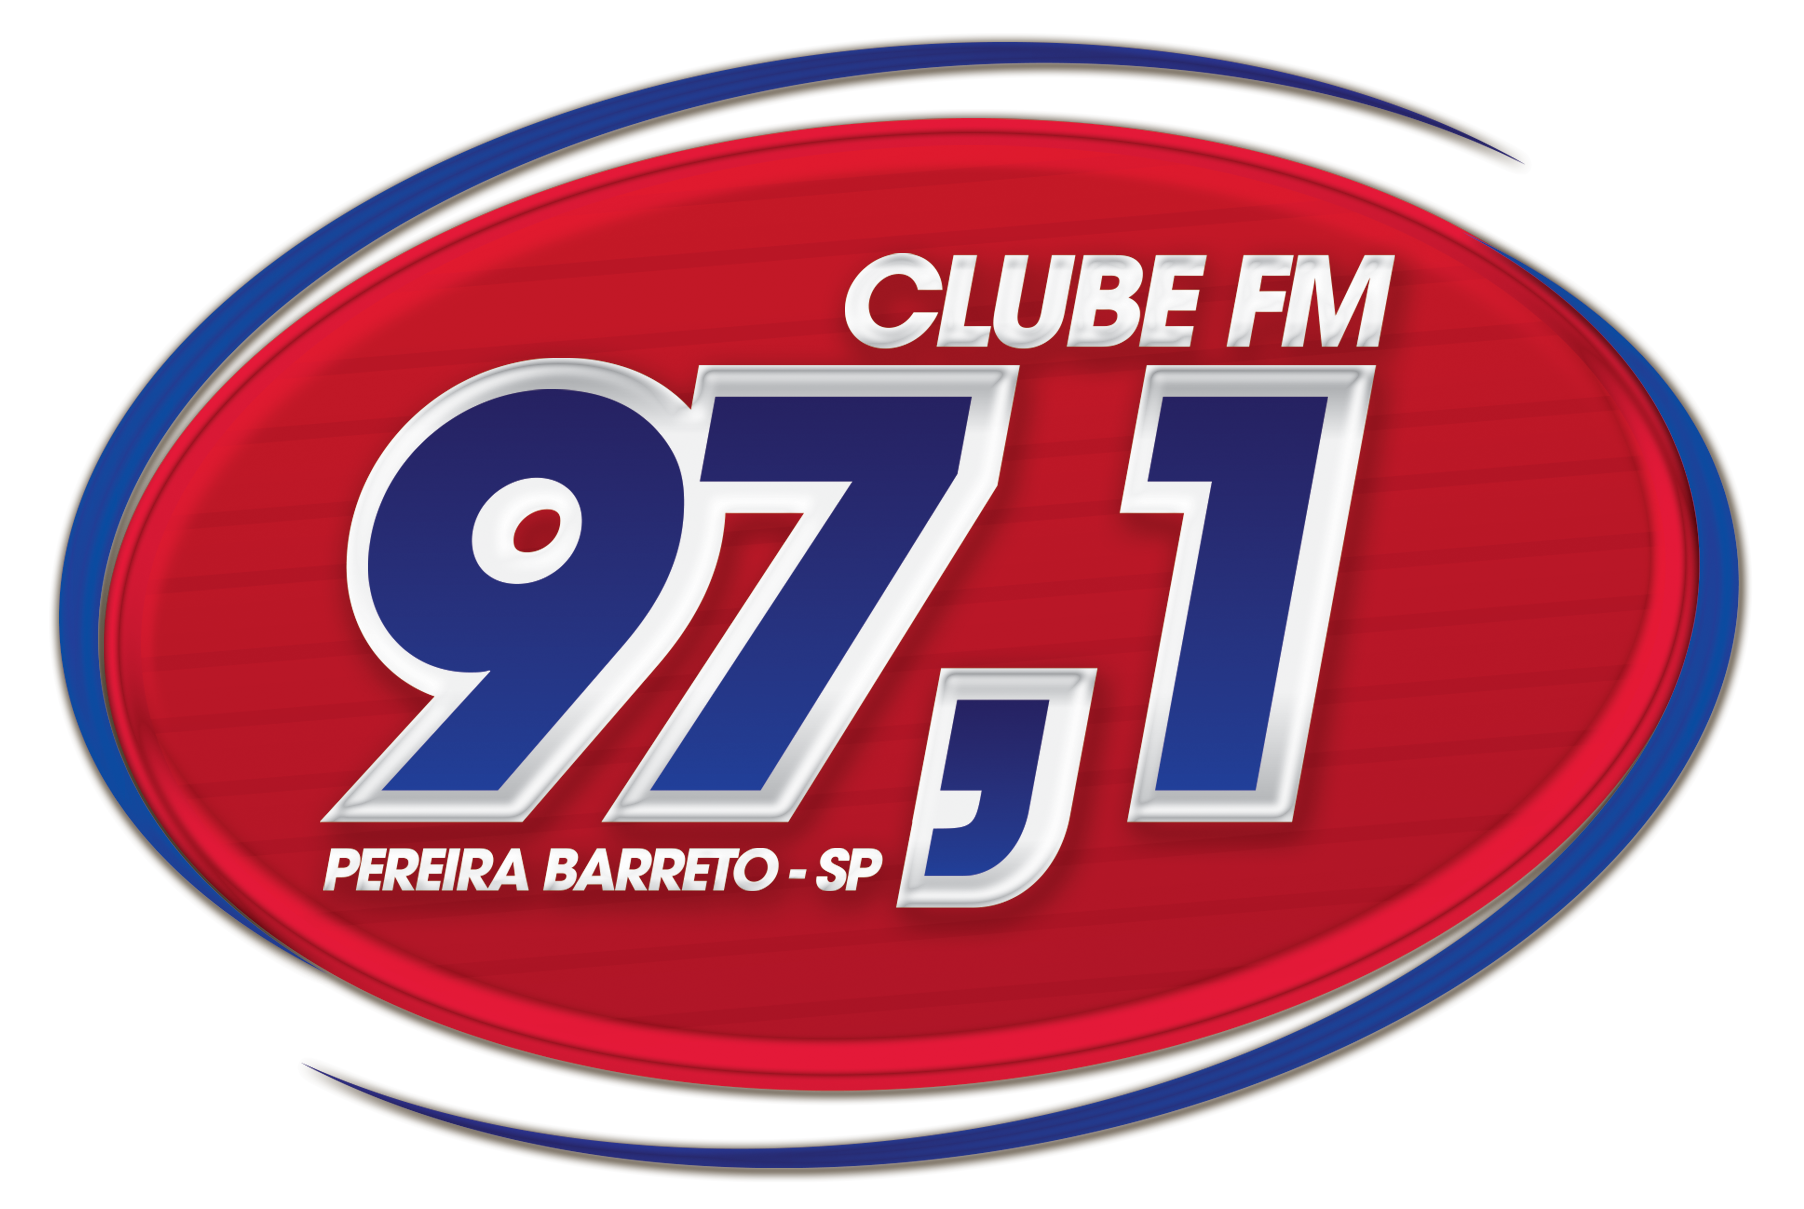 Clube. Fm Clube Teresina. Радио фм 97.6